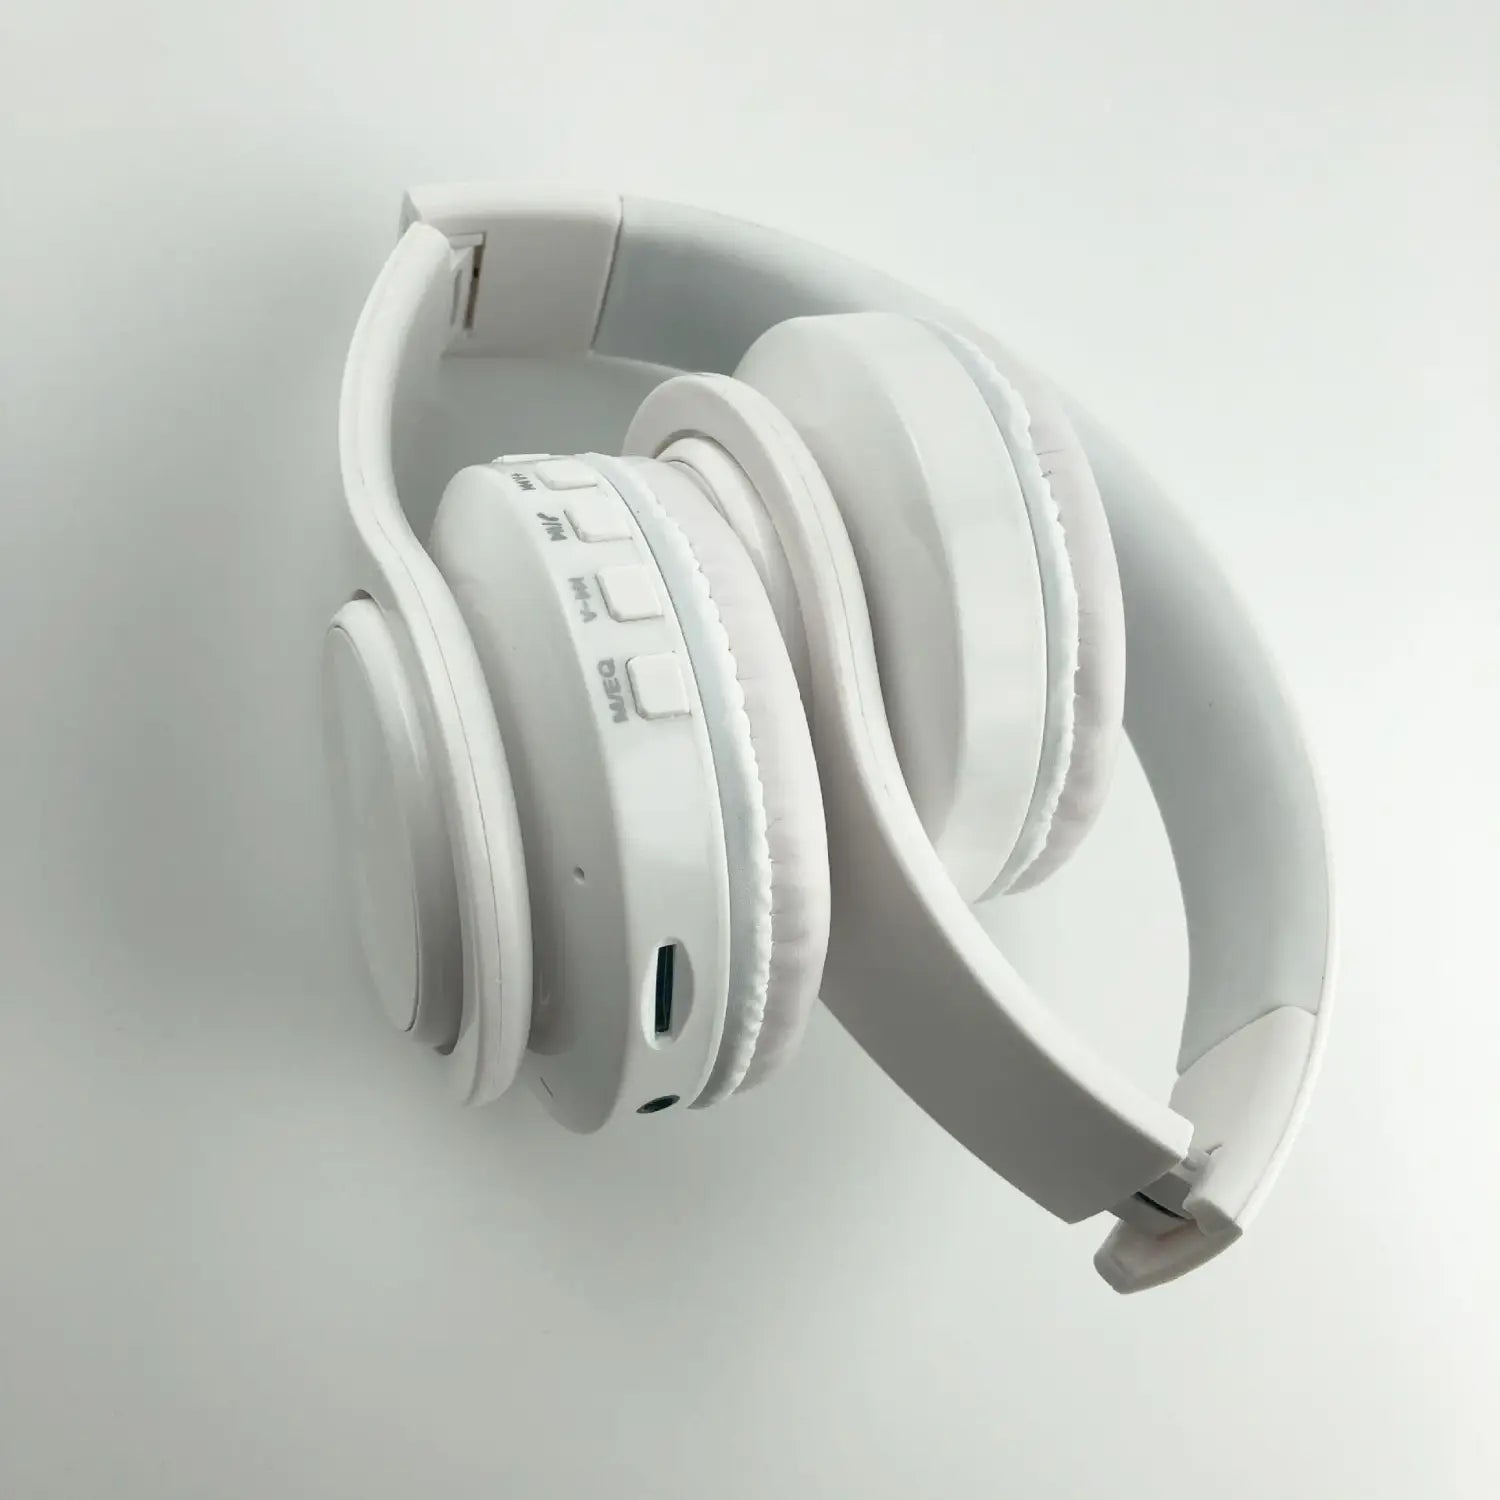 Hi-FiSound Wireless Bluetooth Headphones